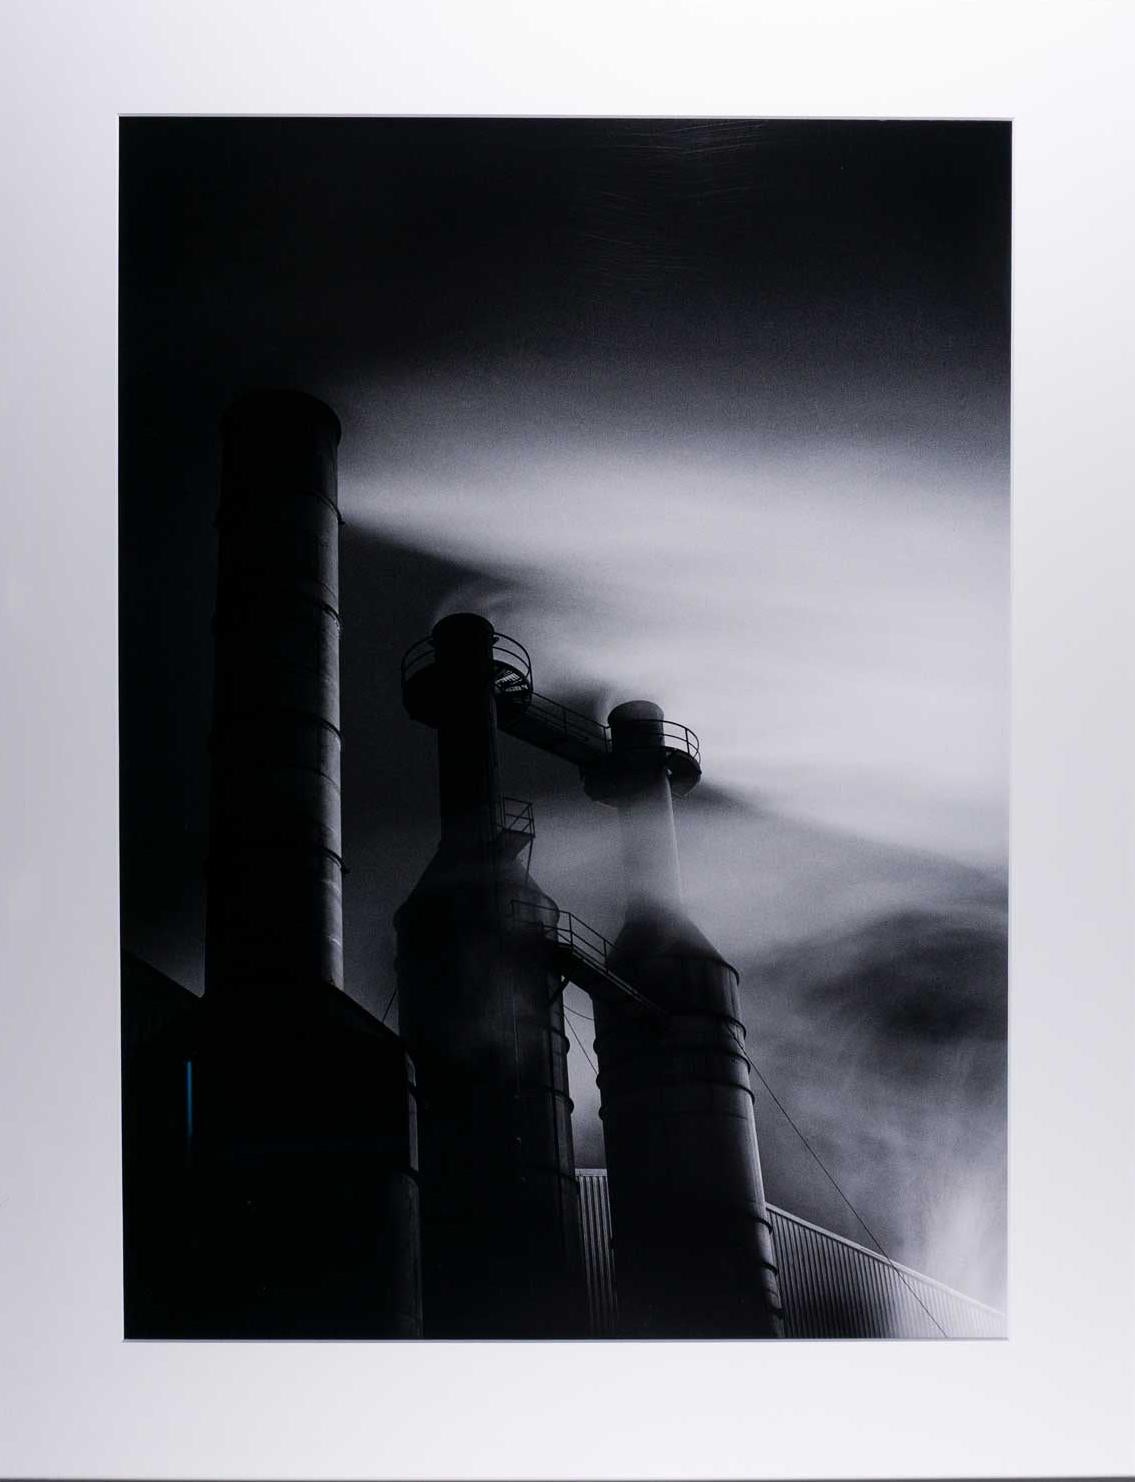 SMOKE STACKS, CAJUN MILL - Contemporary Photograph by David Armentor